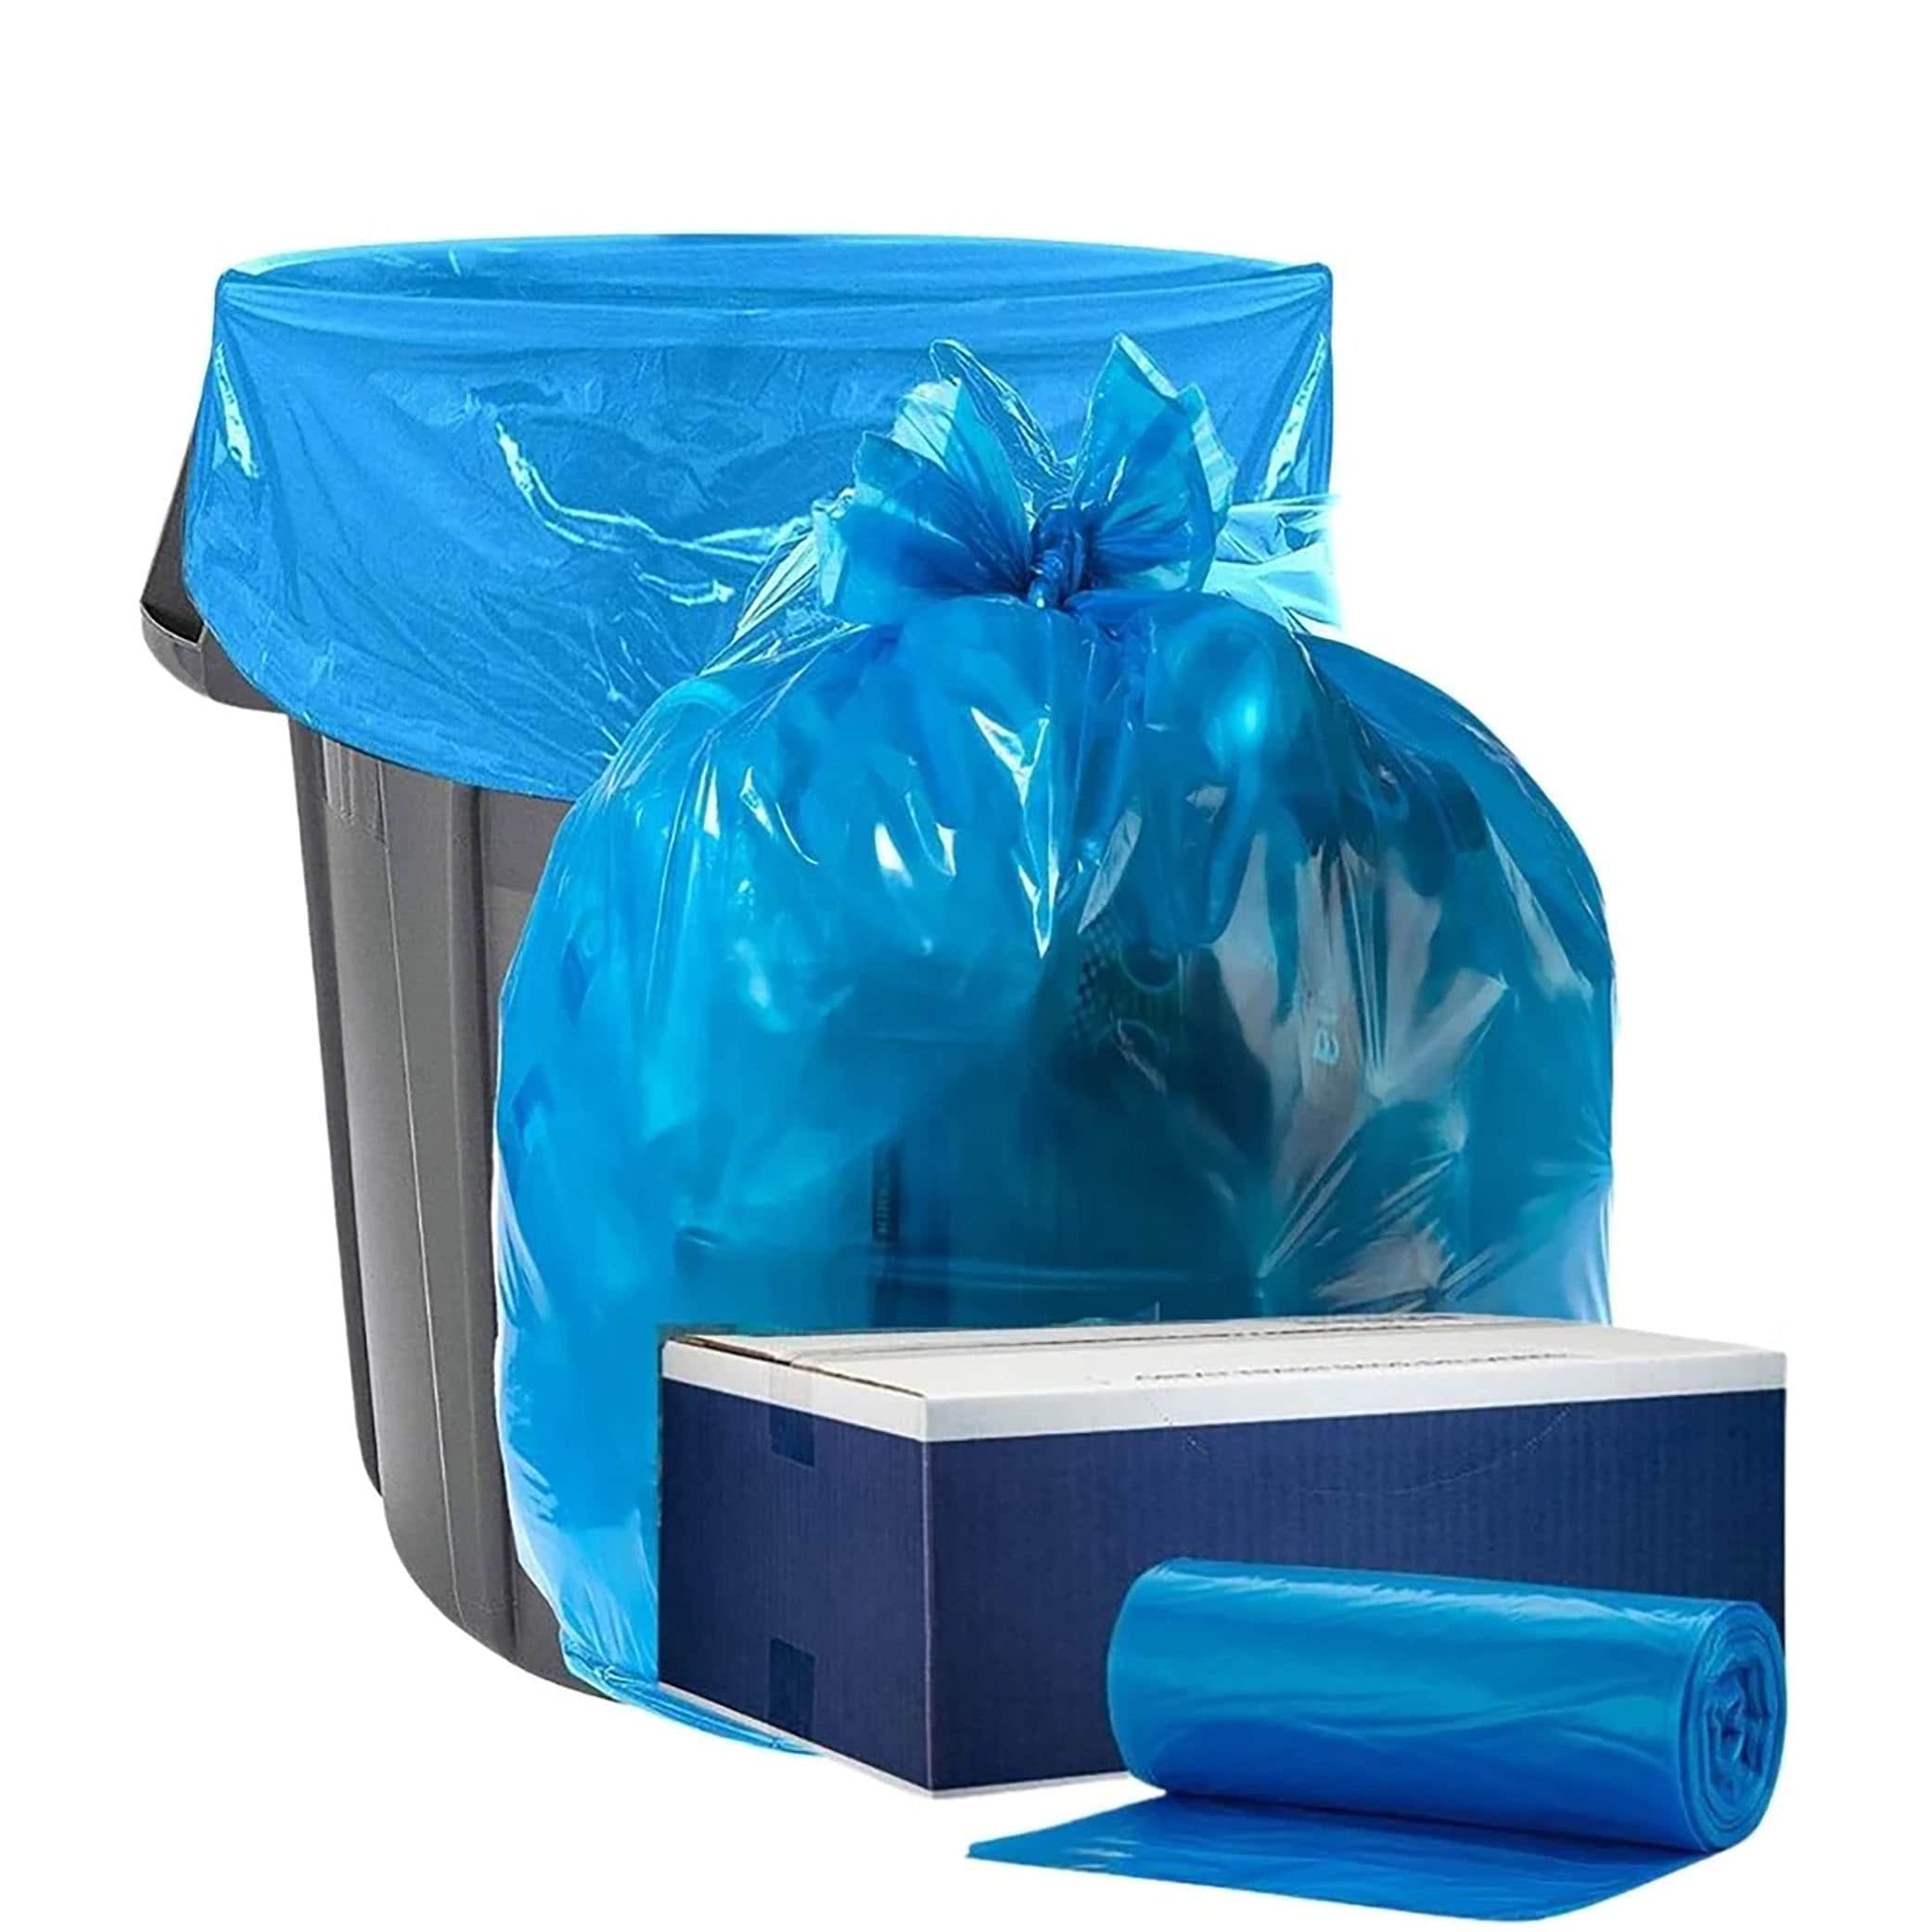 Plasticplace 12-16 Gallon Trash Bags, Green (250 Count)